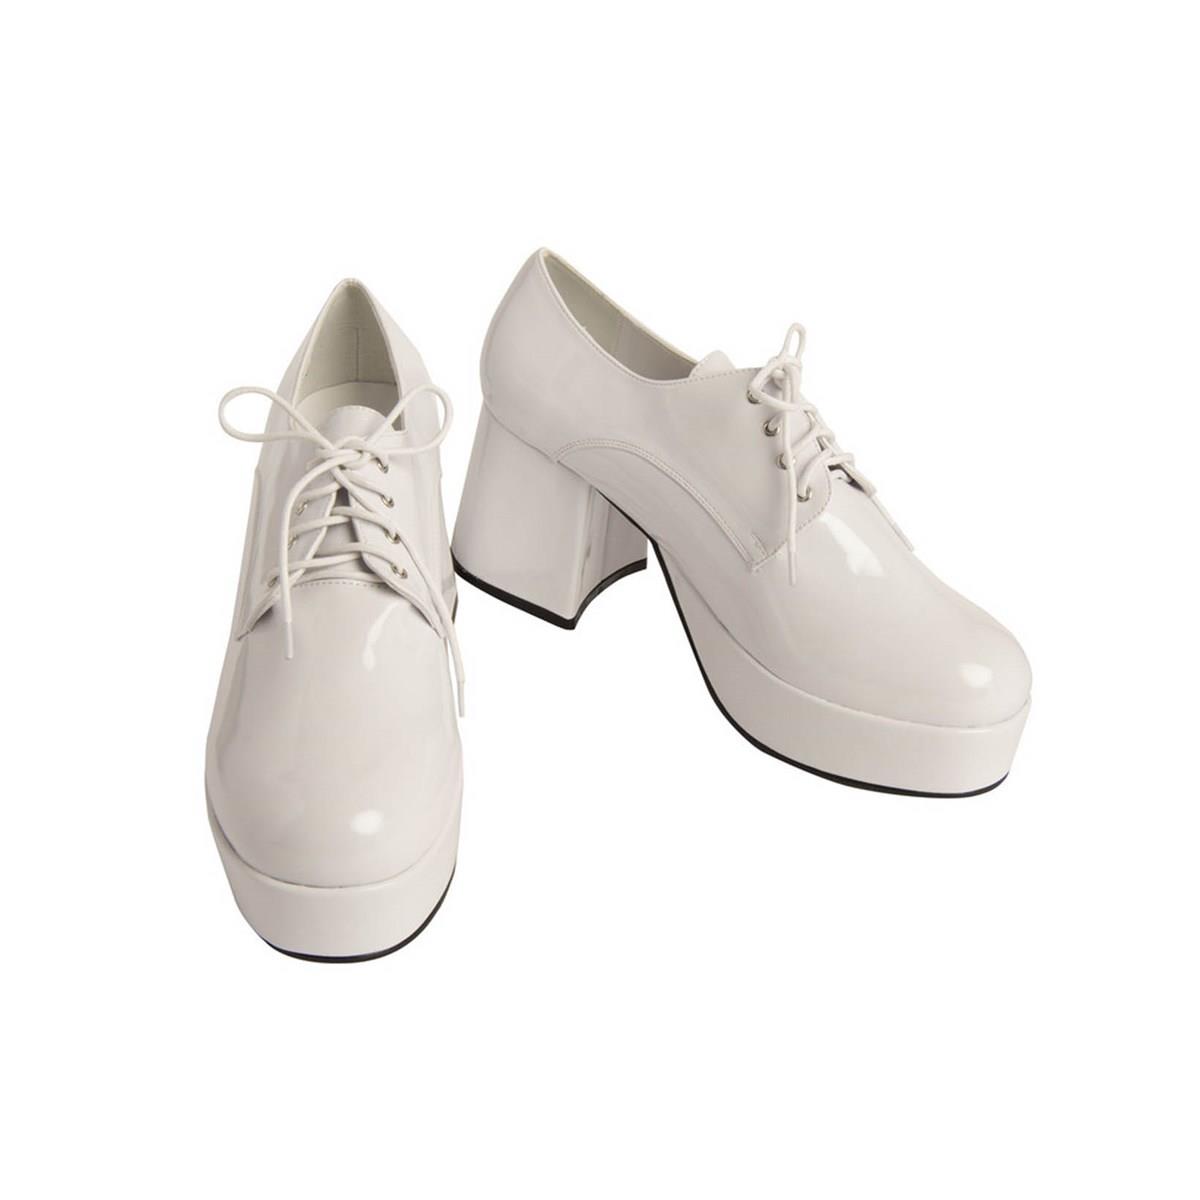 Picture of Rubies 283955 Mens Pimp Platform White Shoes, Size 10-11